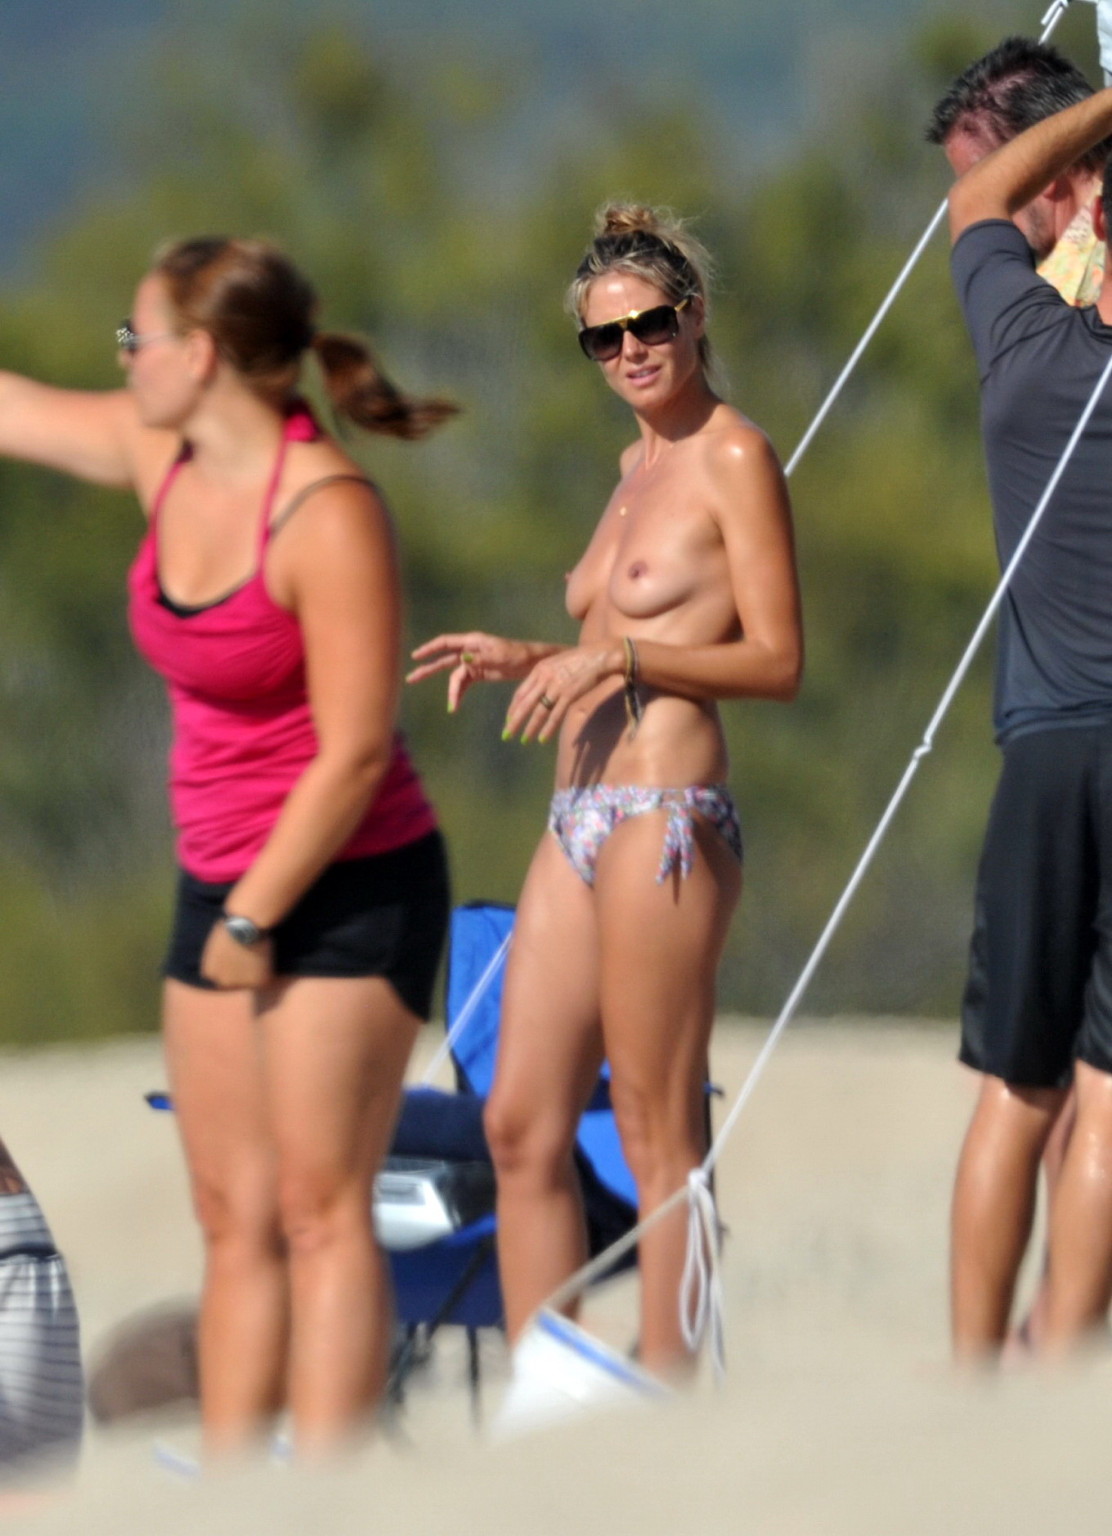 Heidi Klum tanning topless on a sandy beach in Corsica #75293235